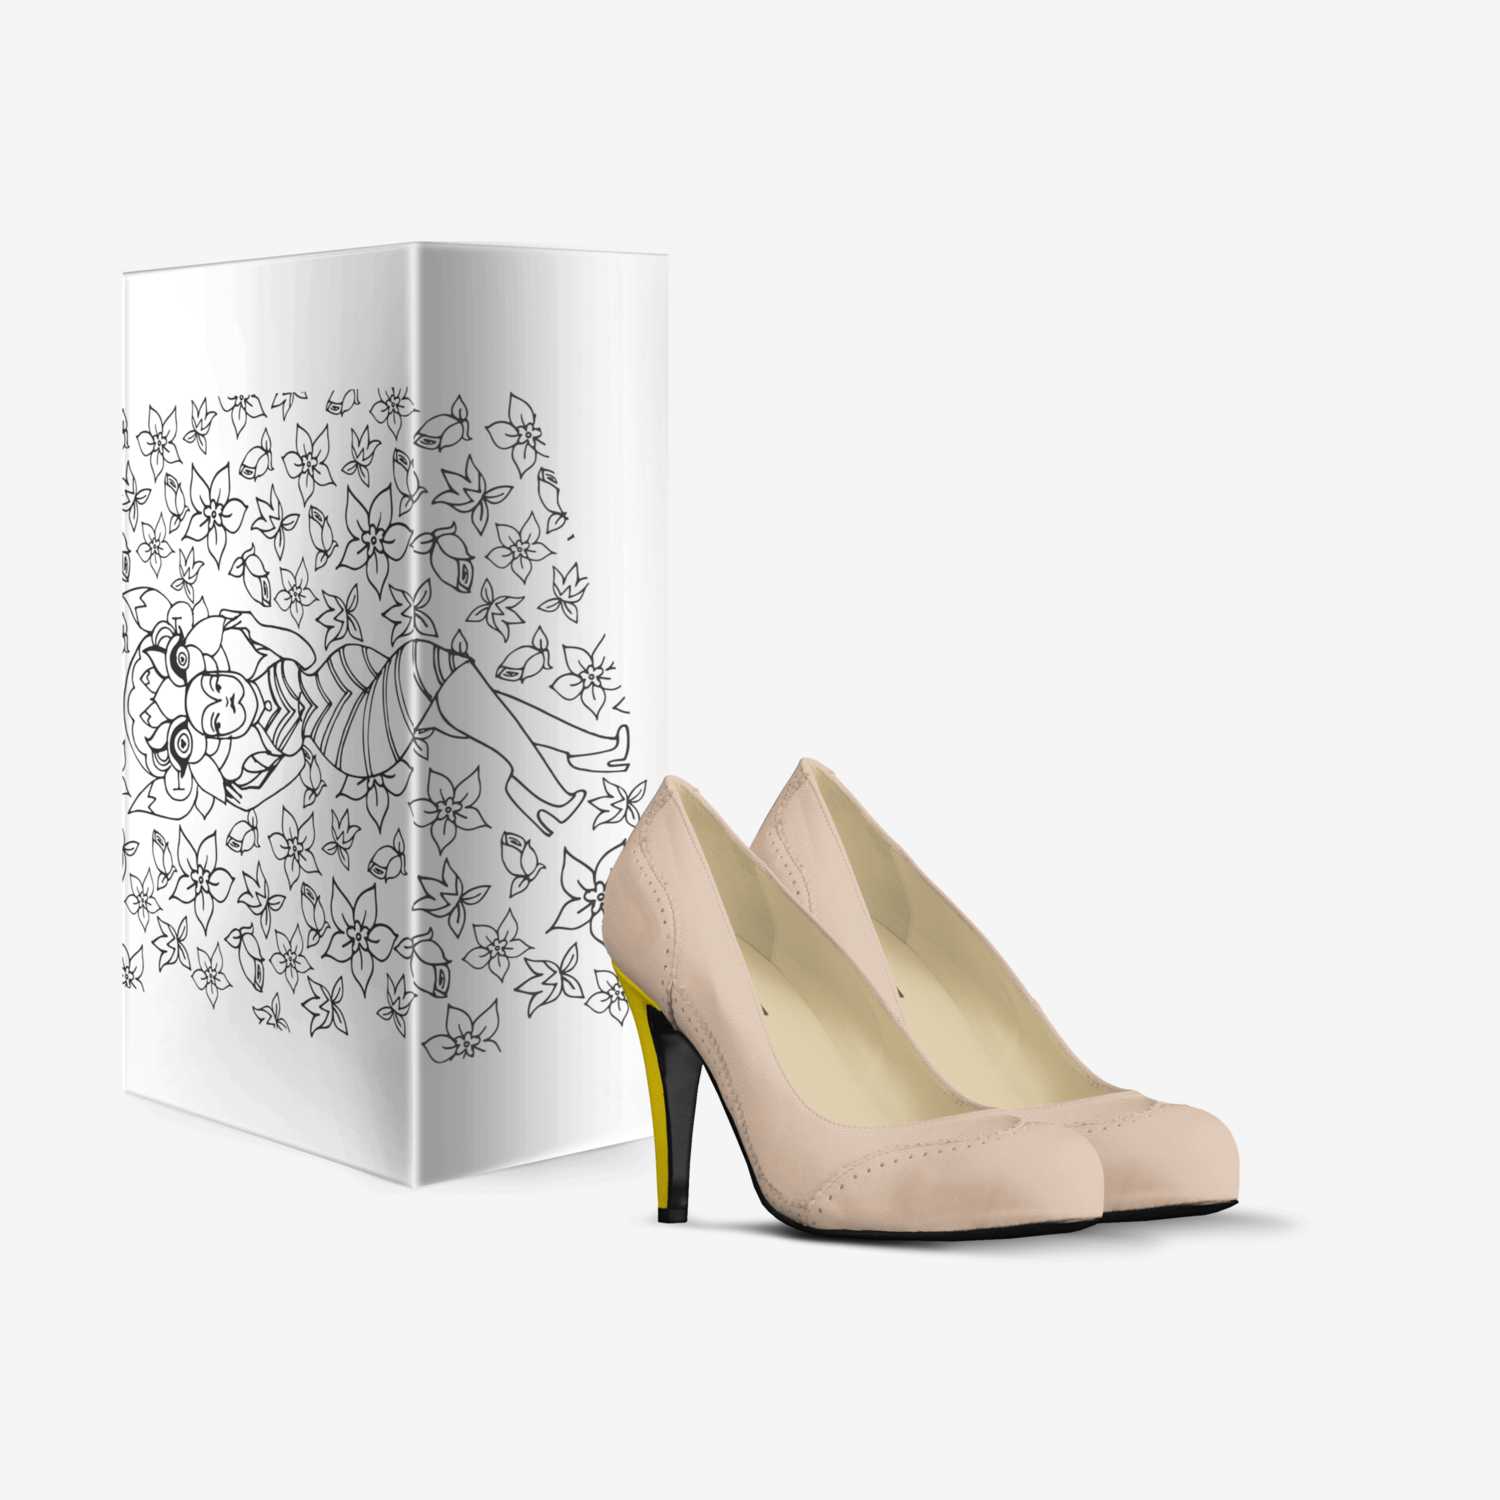 iaMai dream custom made in Italy shoes by Ambrosia Sullivan | Box view